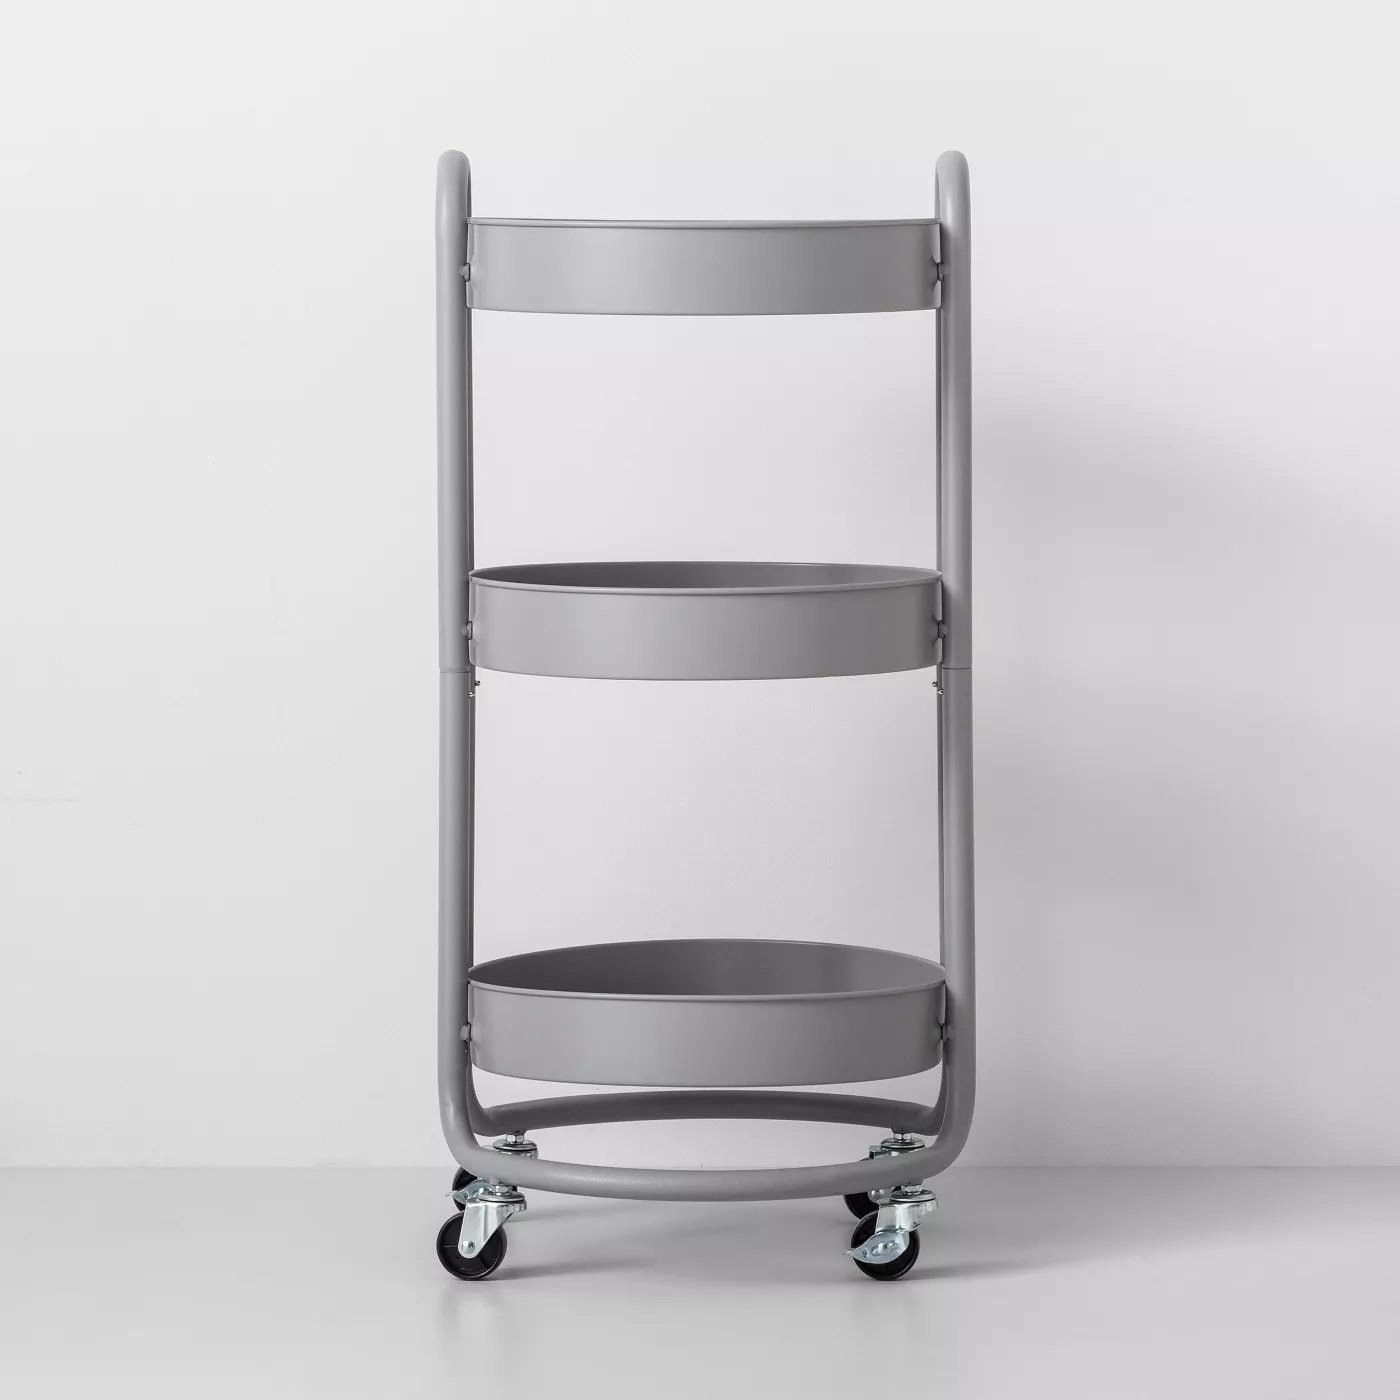 A rollable metal cart